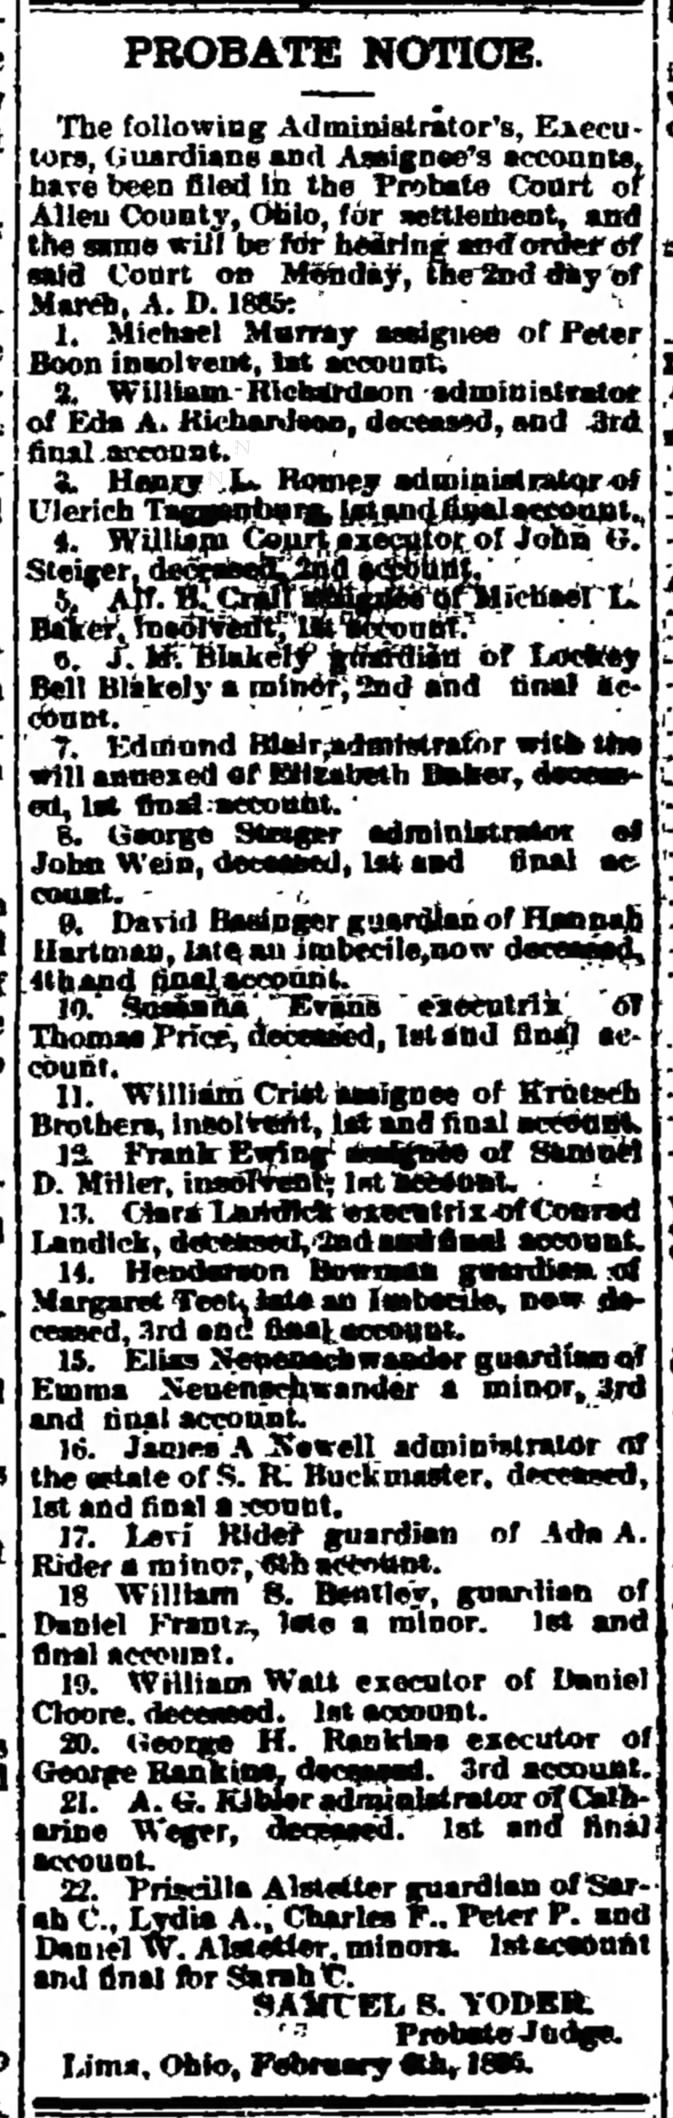 Priscilla Alstetter probate notice - 7 Feb 1885, Lima News, Lima OH